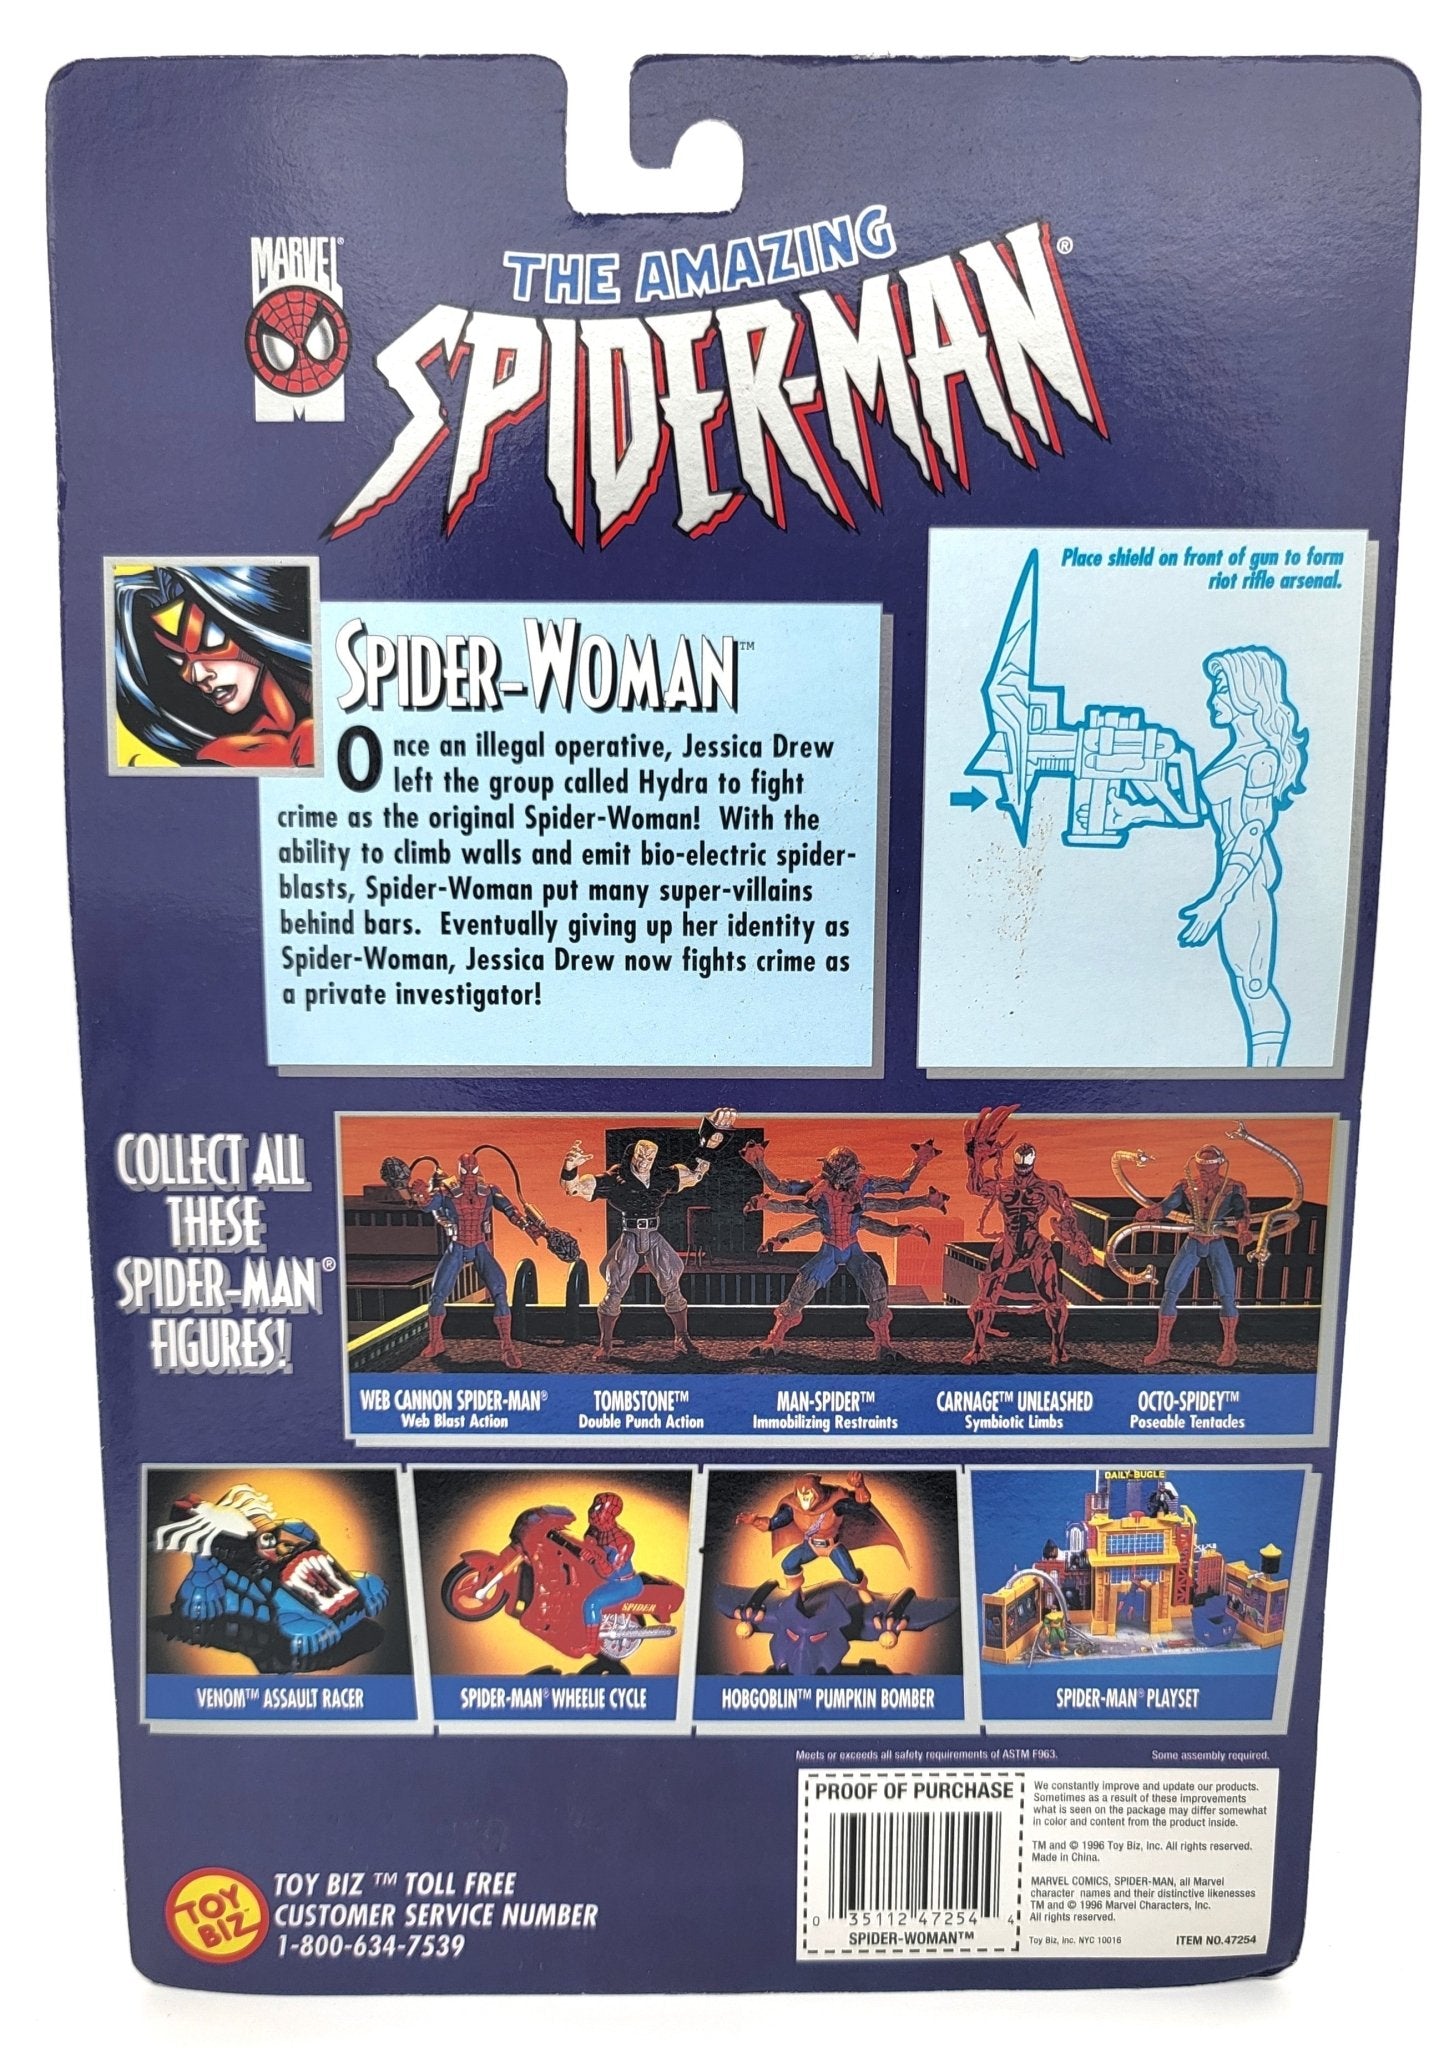 Toy Biz - Toy Biz | Spider-Man - Spider Woman 1996 | Special Collector Series | Vintage Marvel Action Figure - Action Figures - Steady Bunny Shop